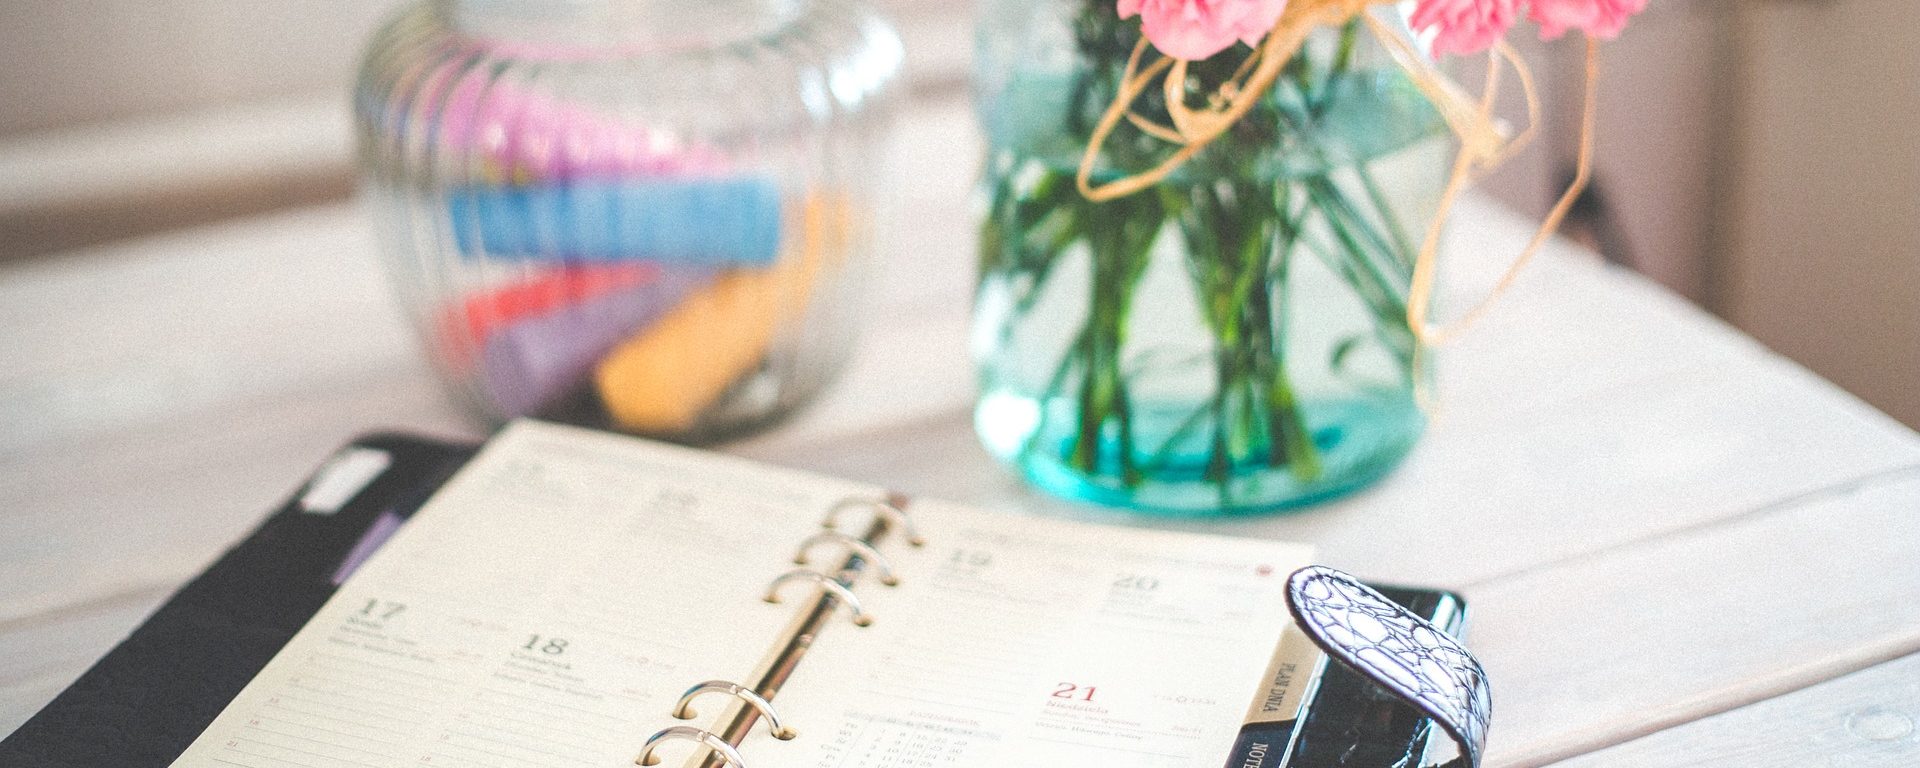 How an Editorial Calendar Can Organize Your Writing Life